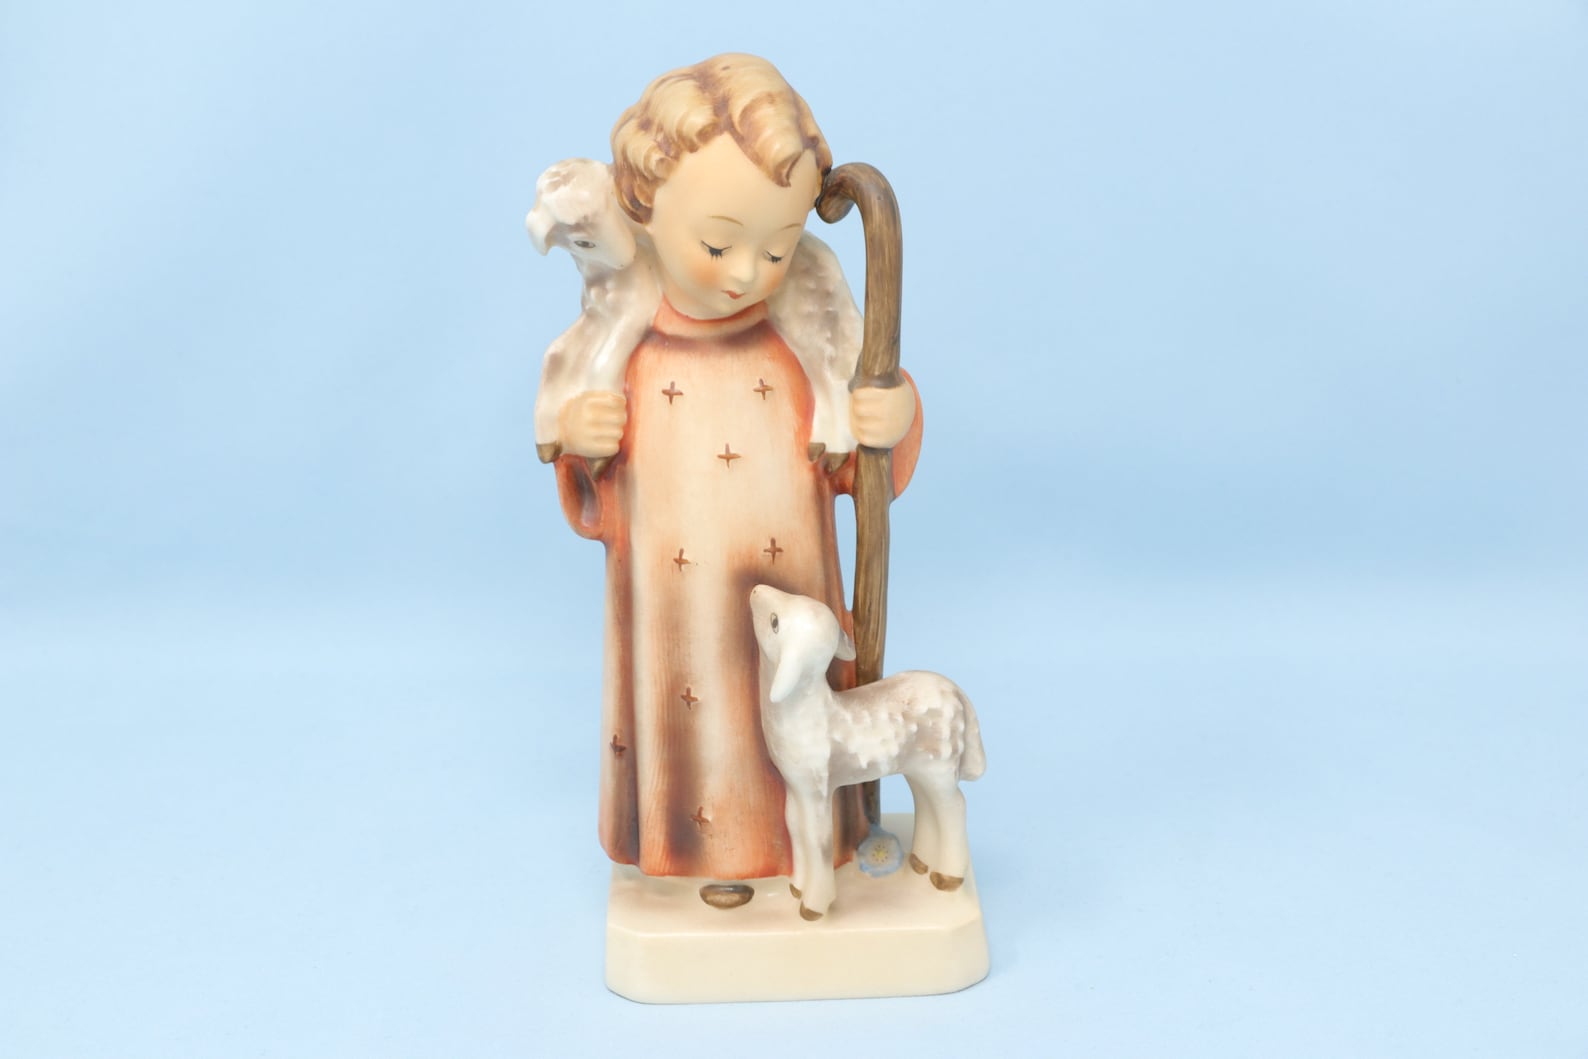 Excellent Vintage 6.5 inch Hummel Good Shepherd figurine #42/0, TMK3, boy with lambs, Hummel 42, Hummel nativity, Goebel porcelain gift